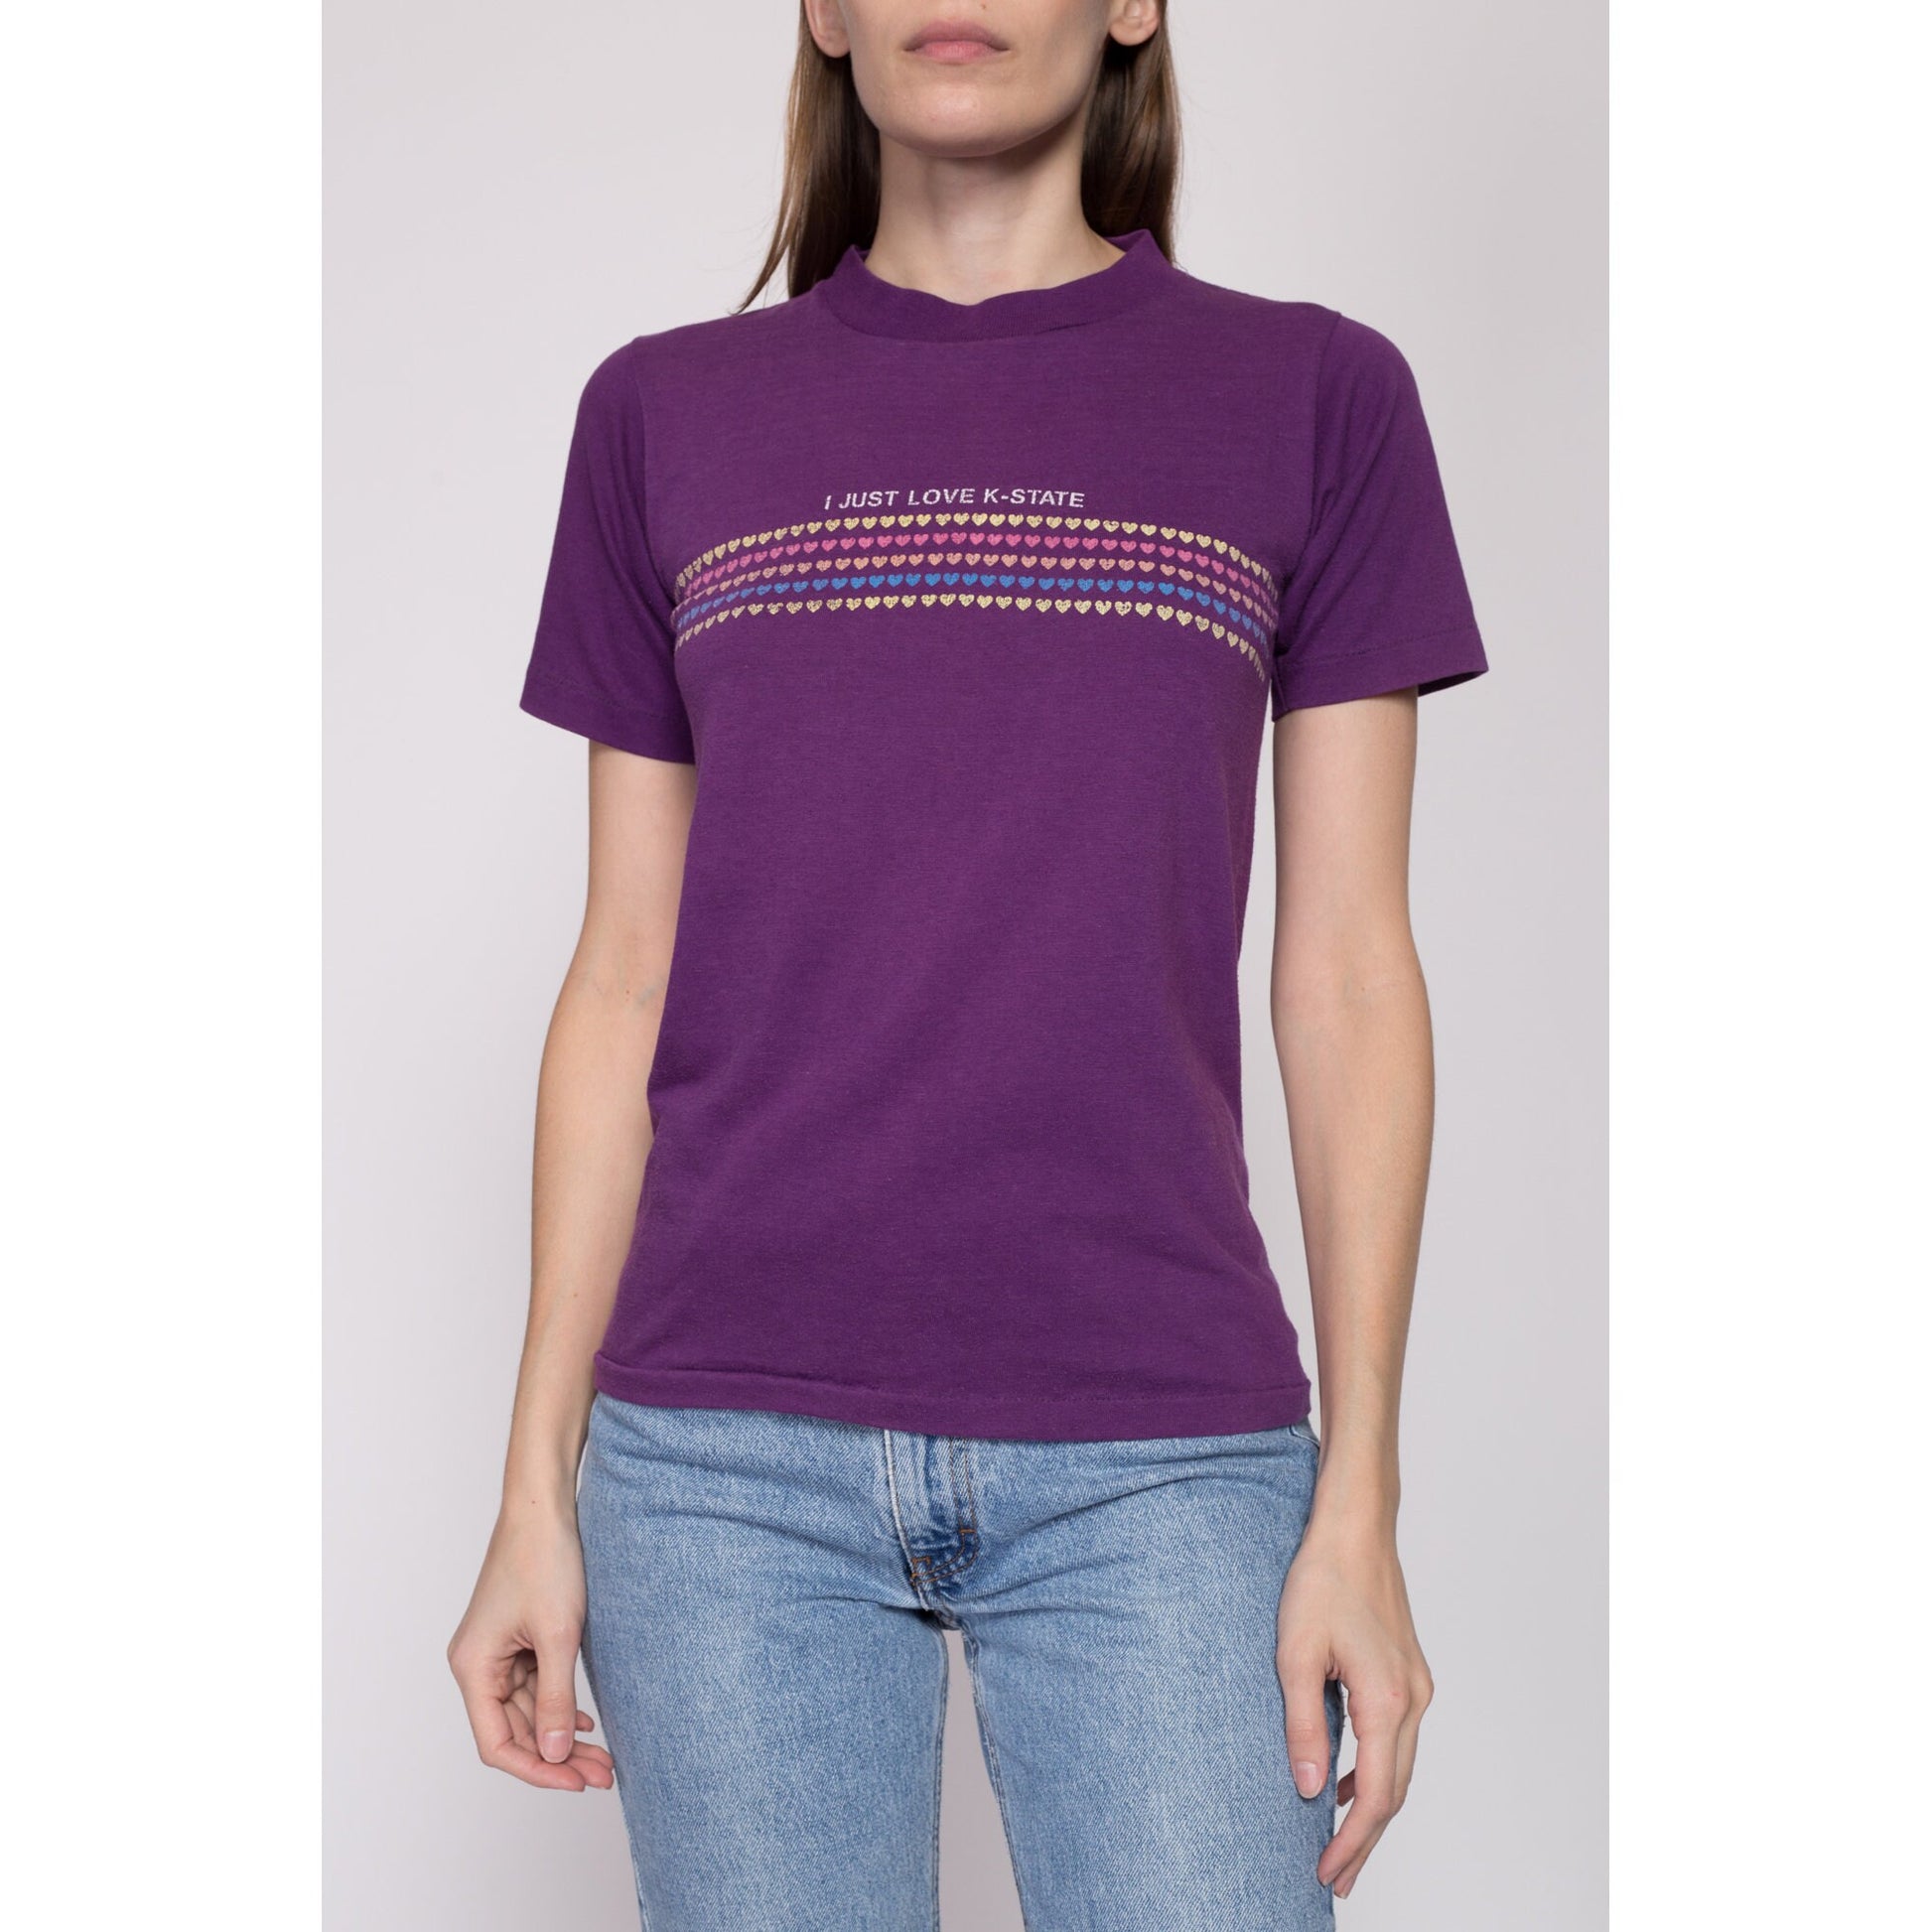 XS 70s "I Just Love K-State" Kansas State University T Shirt | Vintage Purple Retro Heart Graphic College Tee